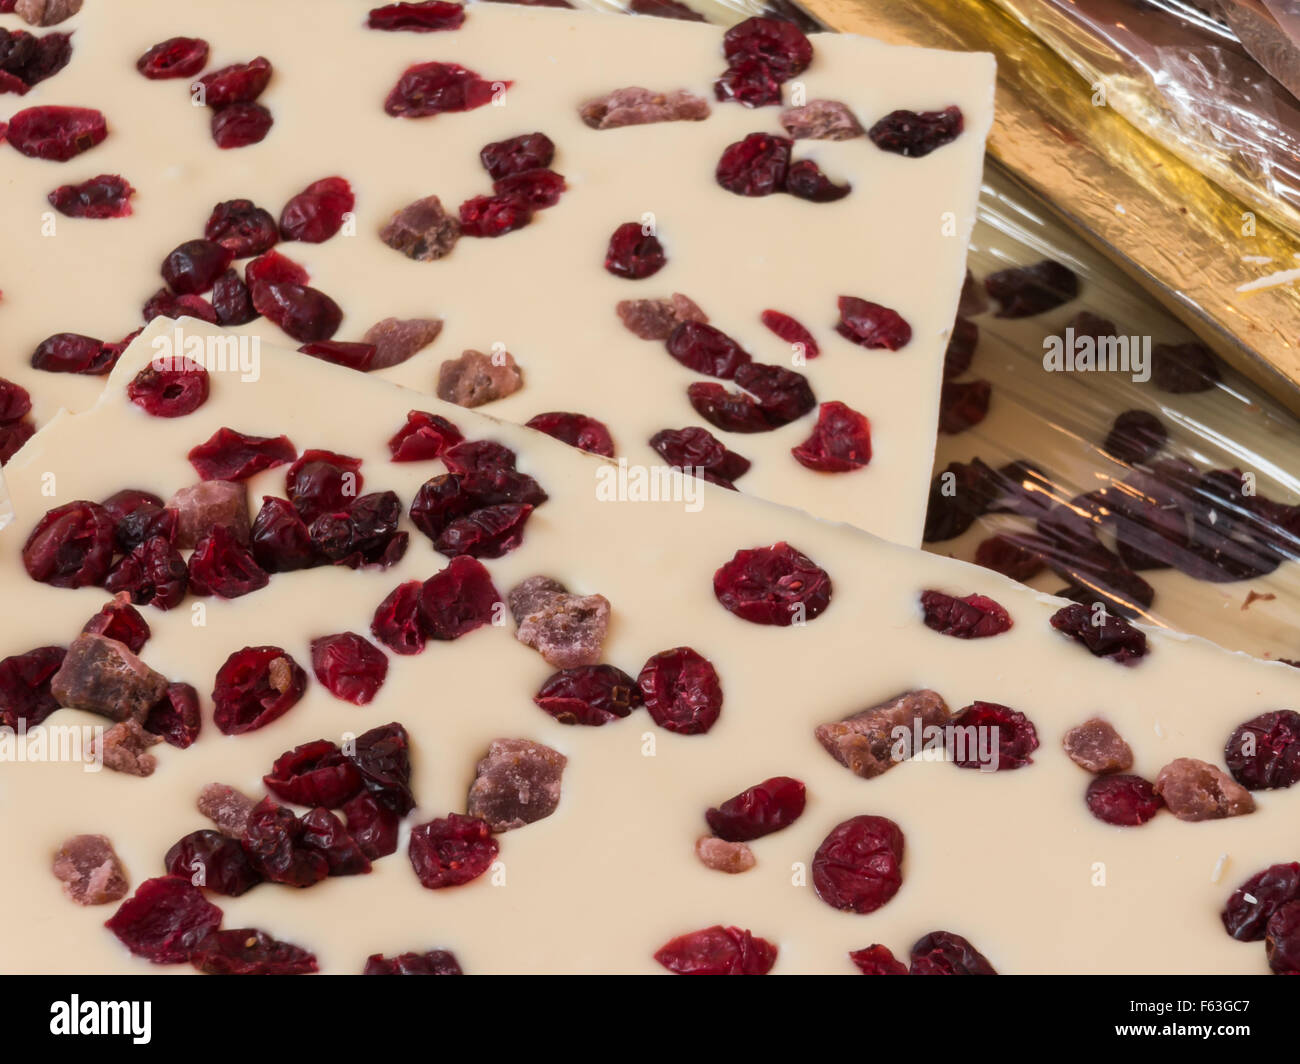 white chocolate block with mixed berries Stock Photo